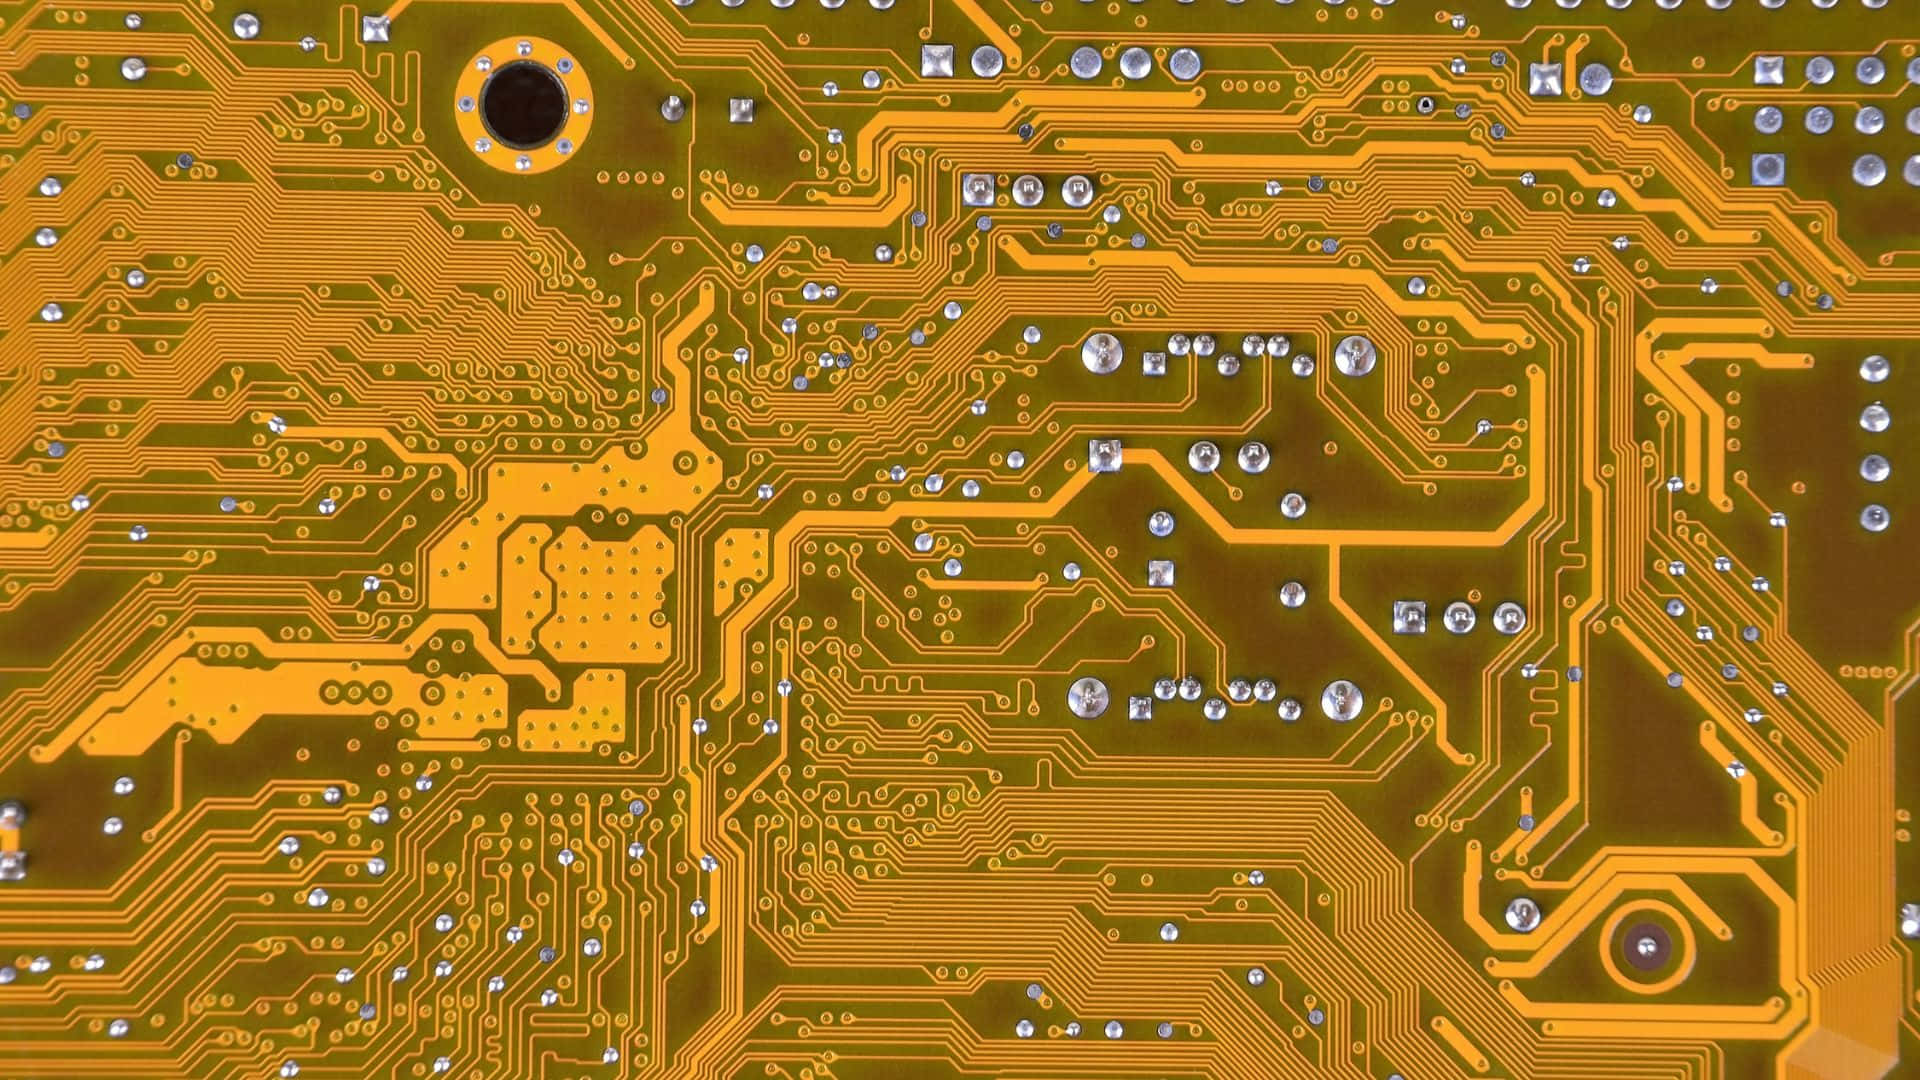 A close-up shot of a complex circuit board